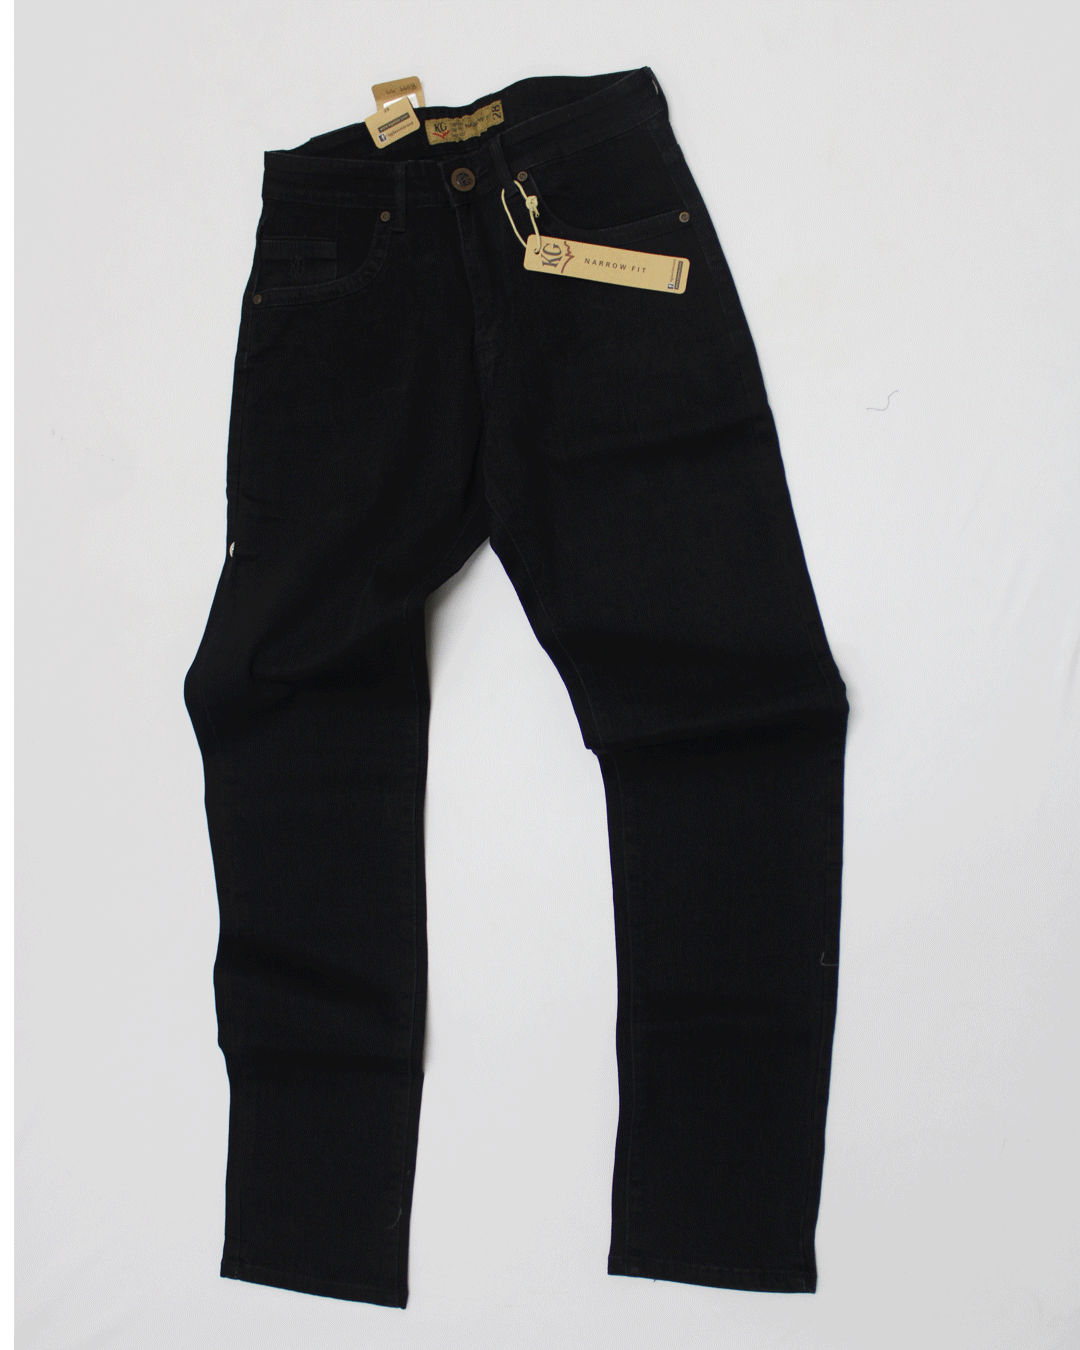 KG Black Narrow Fit Jeans